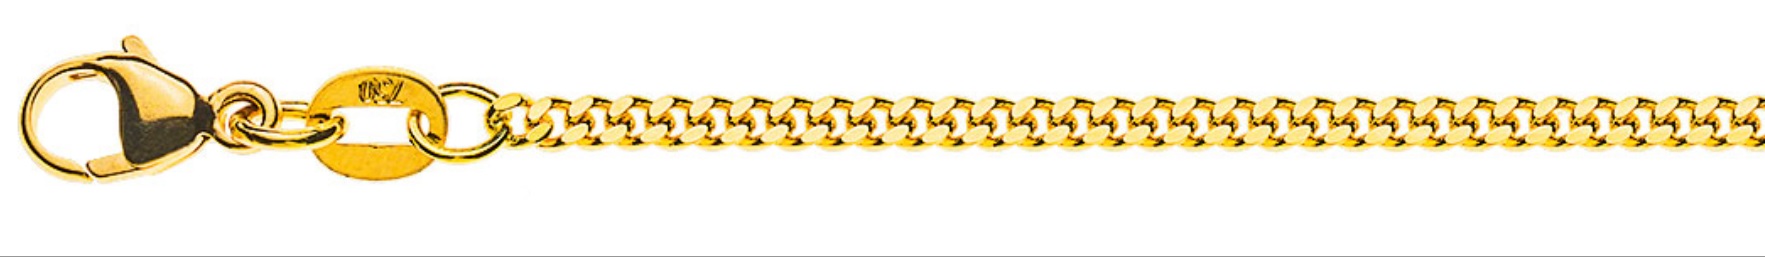 AURONOS Prestige Necklace yellow gold 18K curb chain polished 50cm 2.0mm